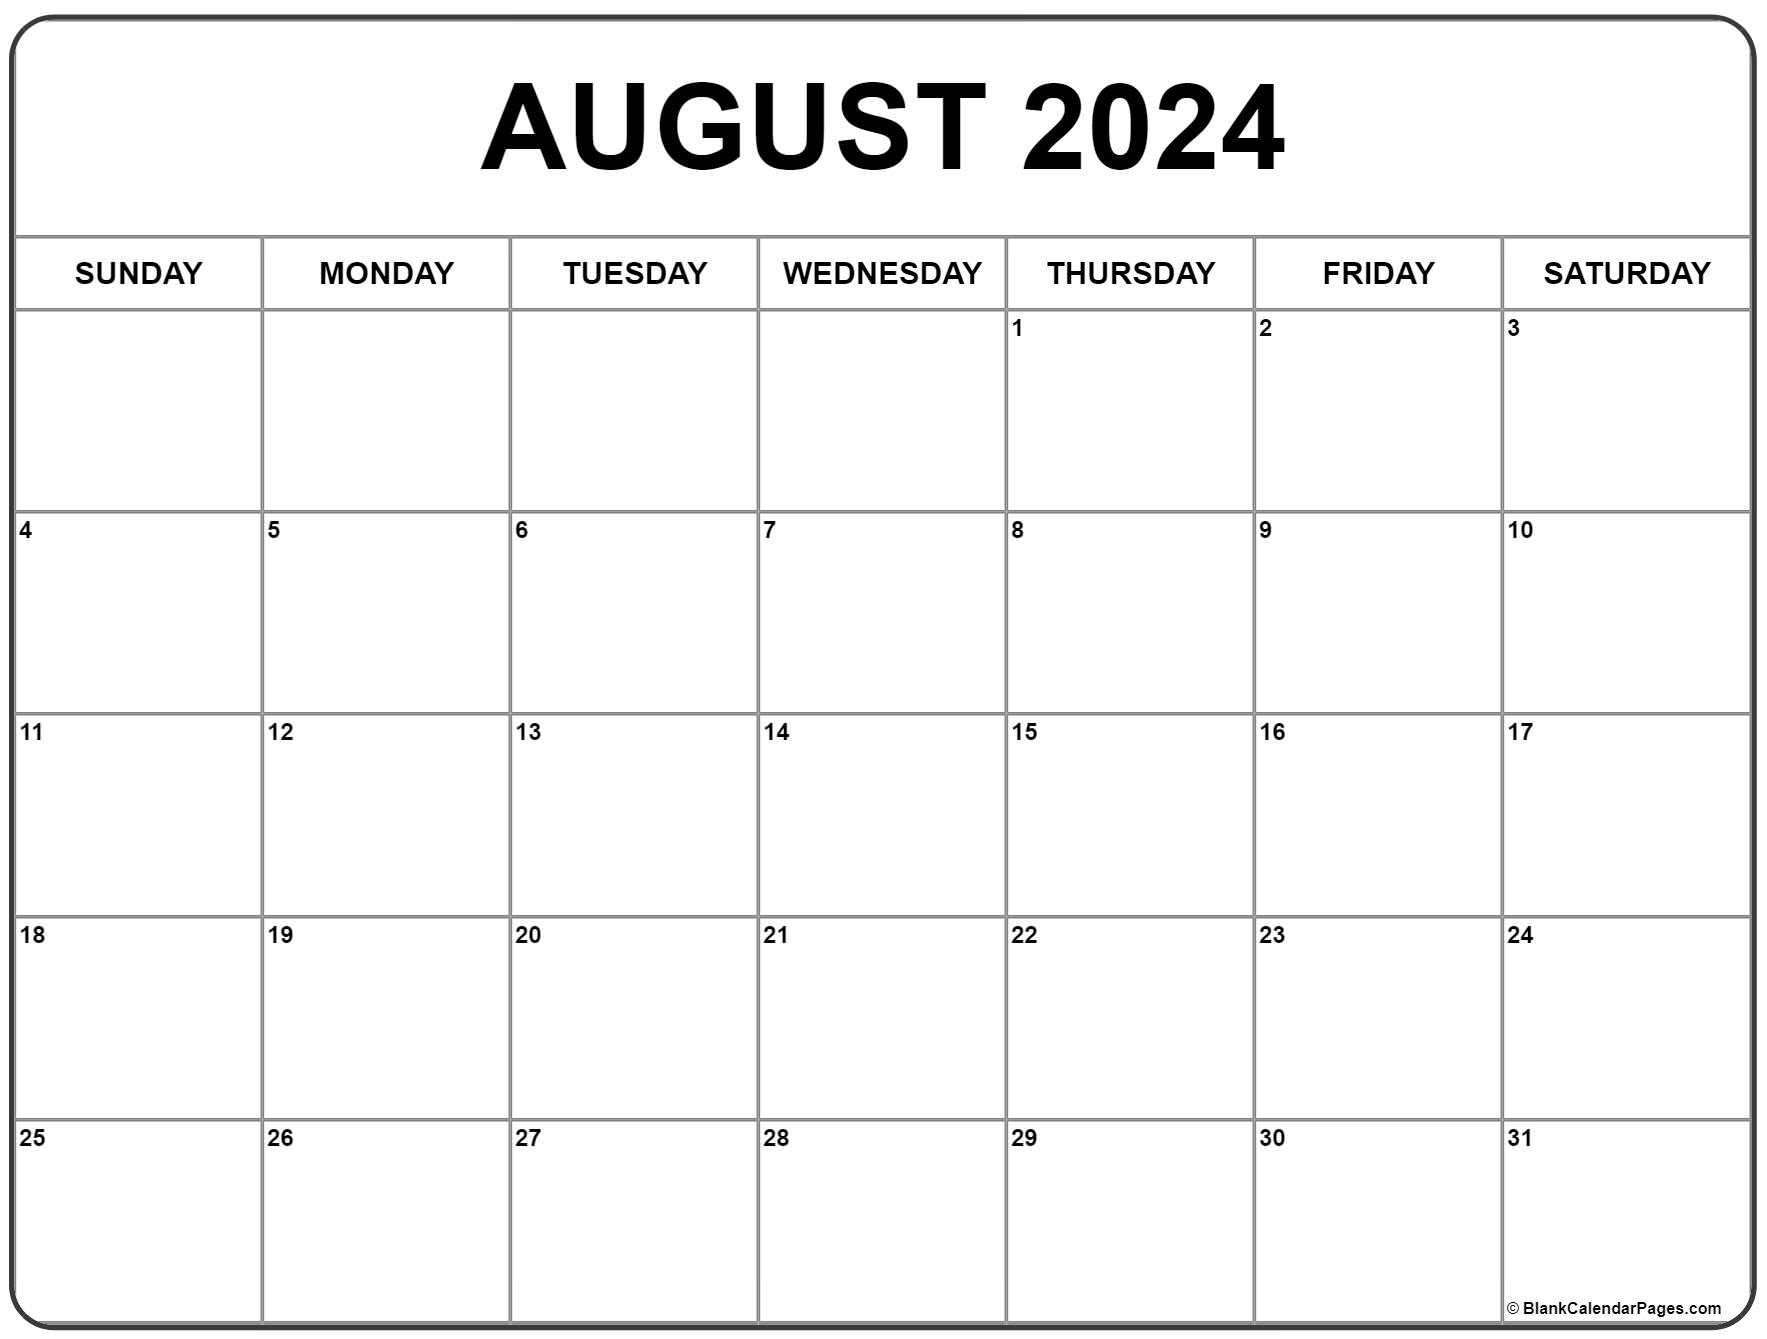 August 2024 Calendar | Free Printable Calendar for August 2024 Free Printable Calendar